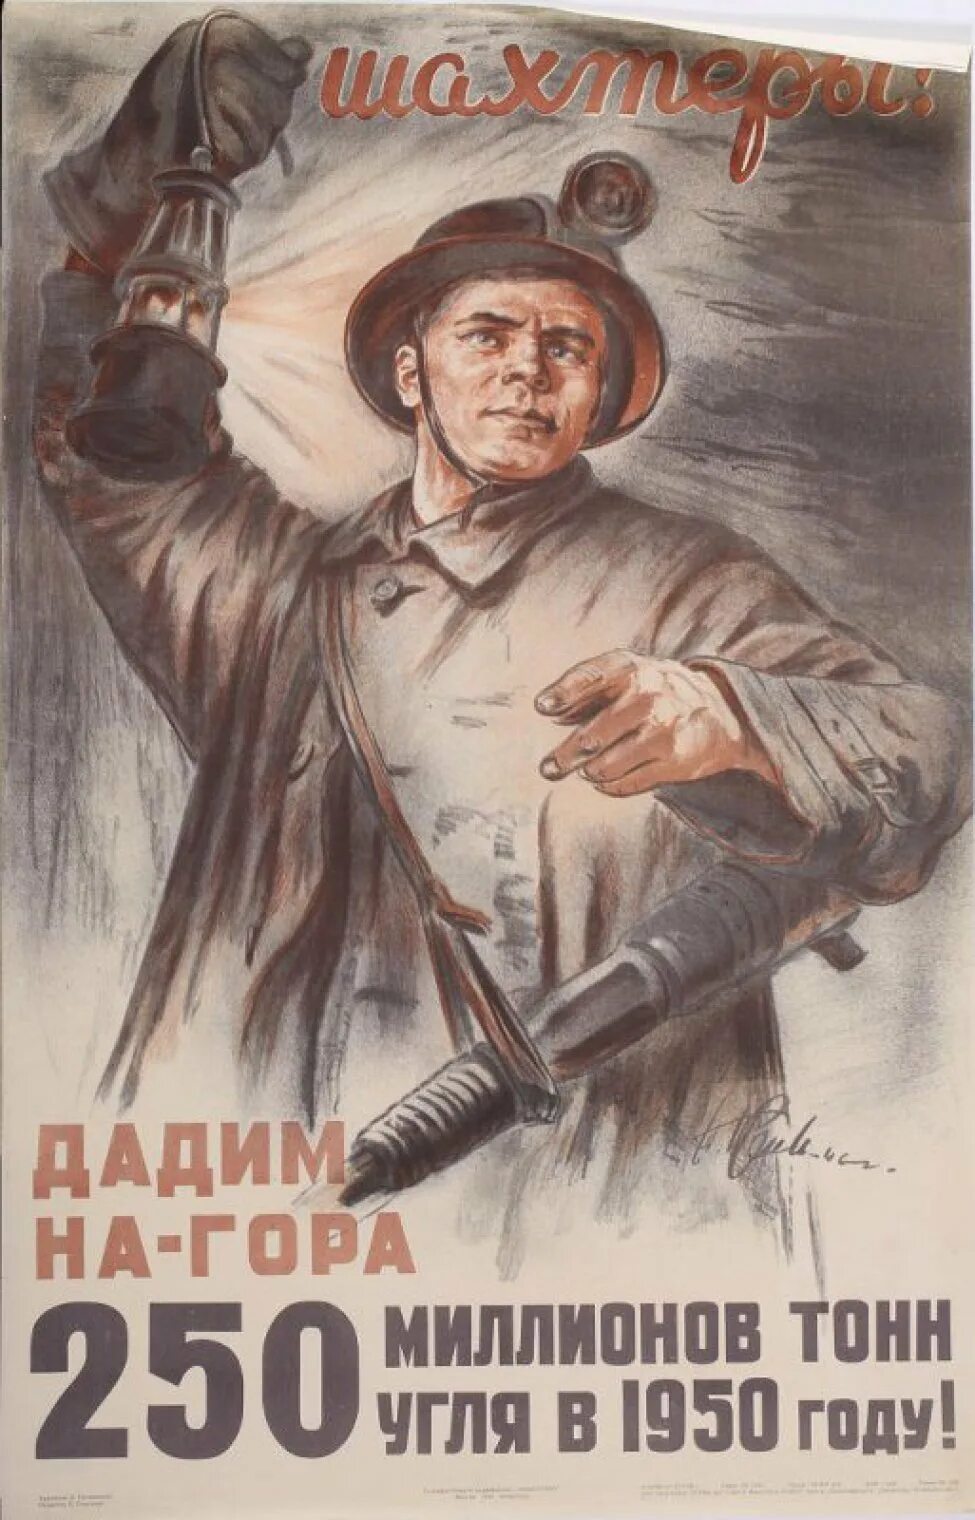 Плакат. Шахтёры плакат. Плакаты СССР. Советские агитационные плакаты.